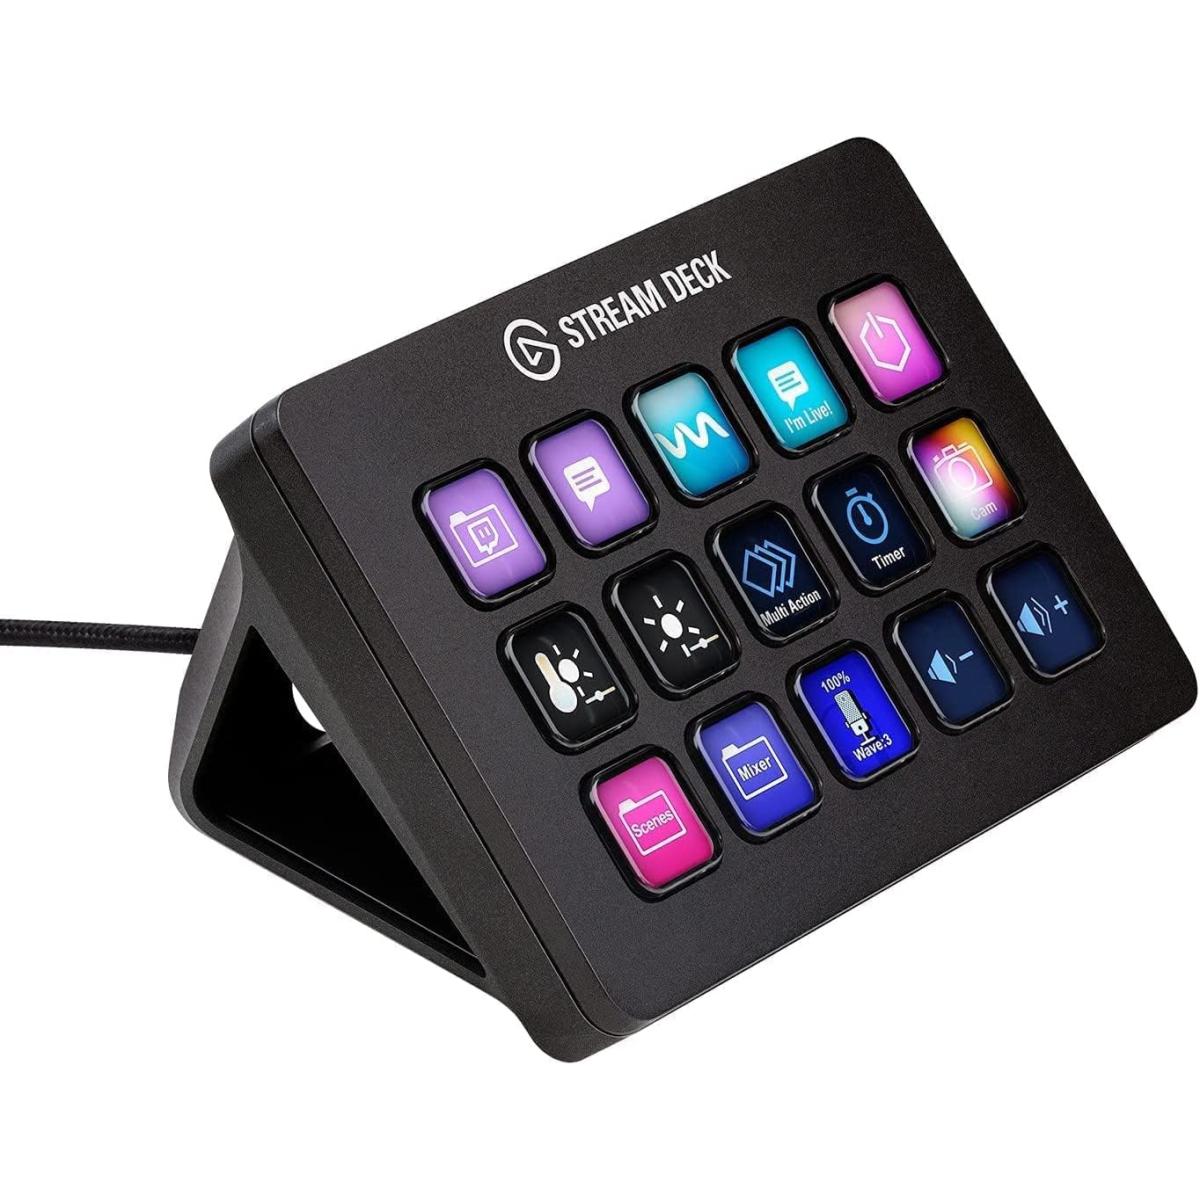 Corsair Elgato Stream Deck MK.2 Studio Controller w/ 15 Customizable LCD keys, For PC & Mac USB 2.0